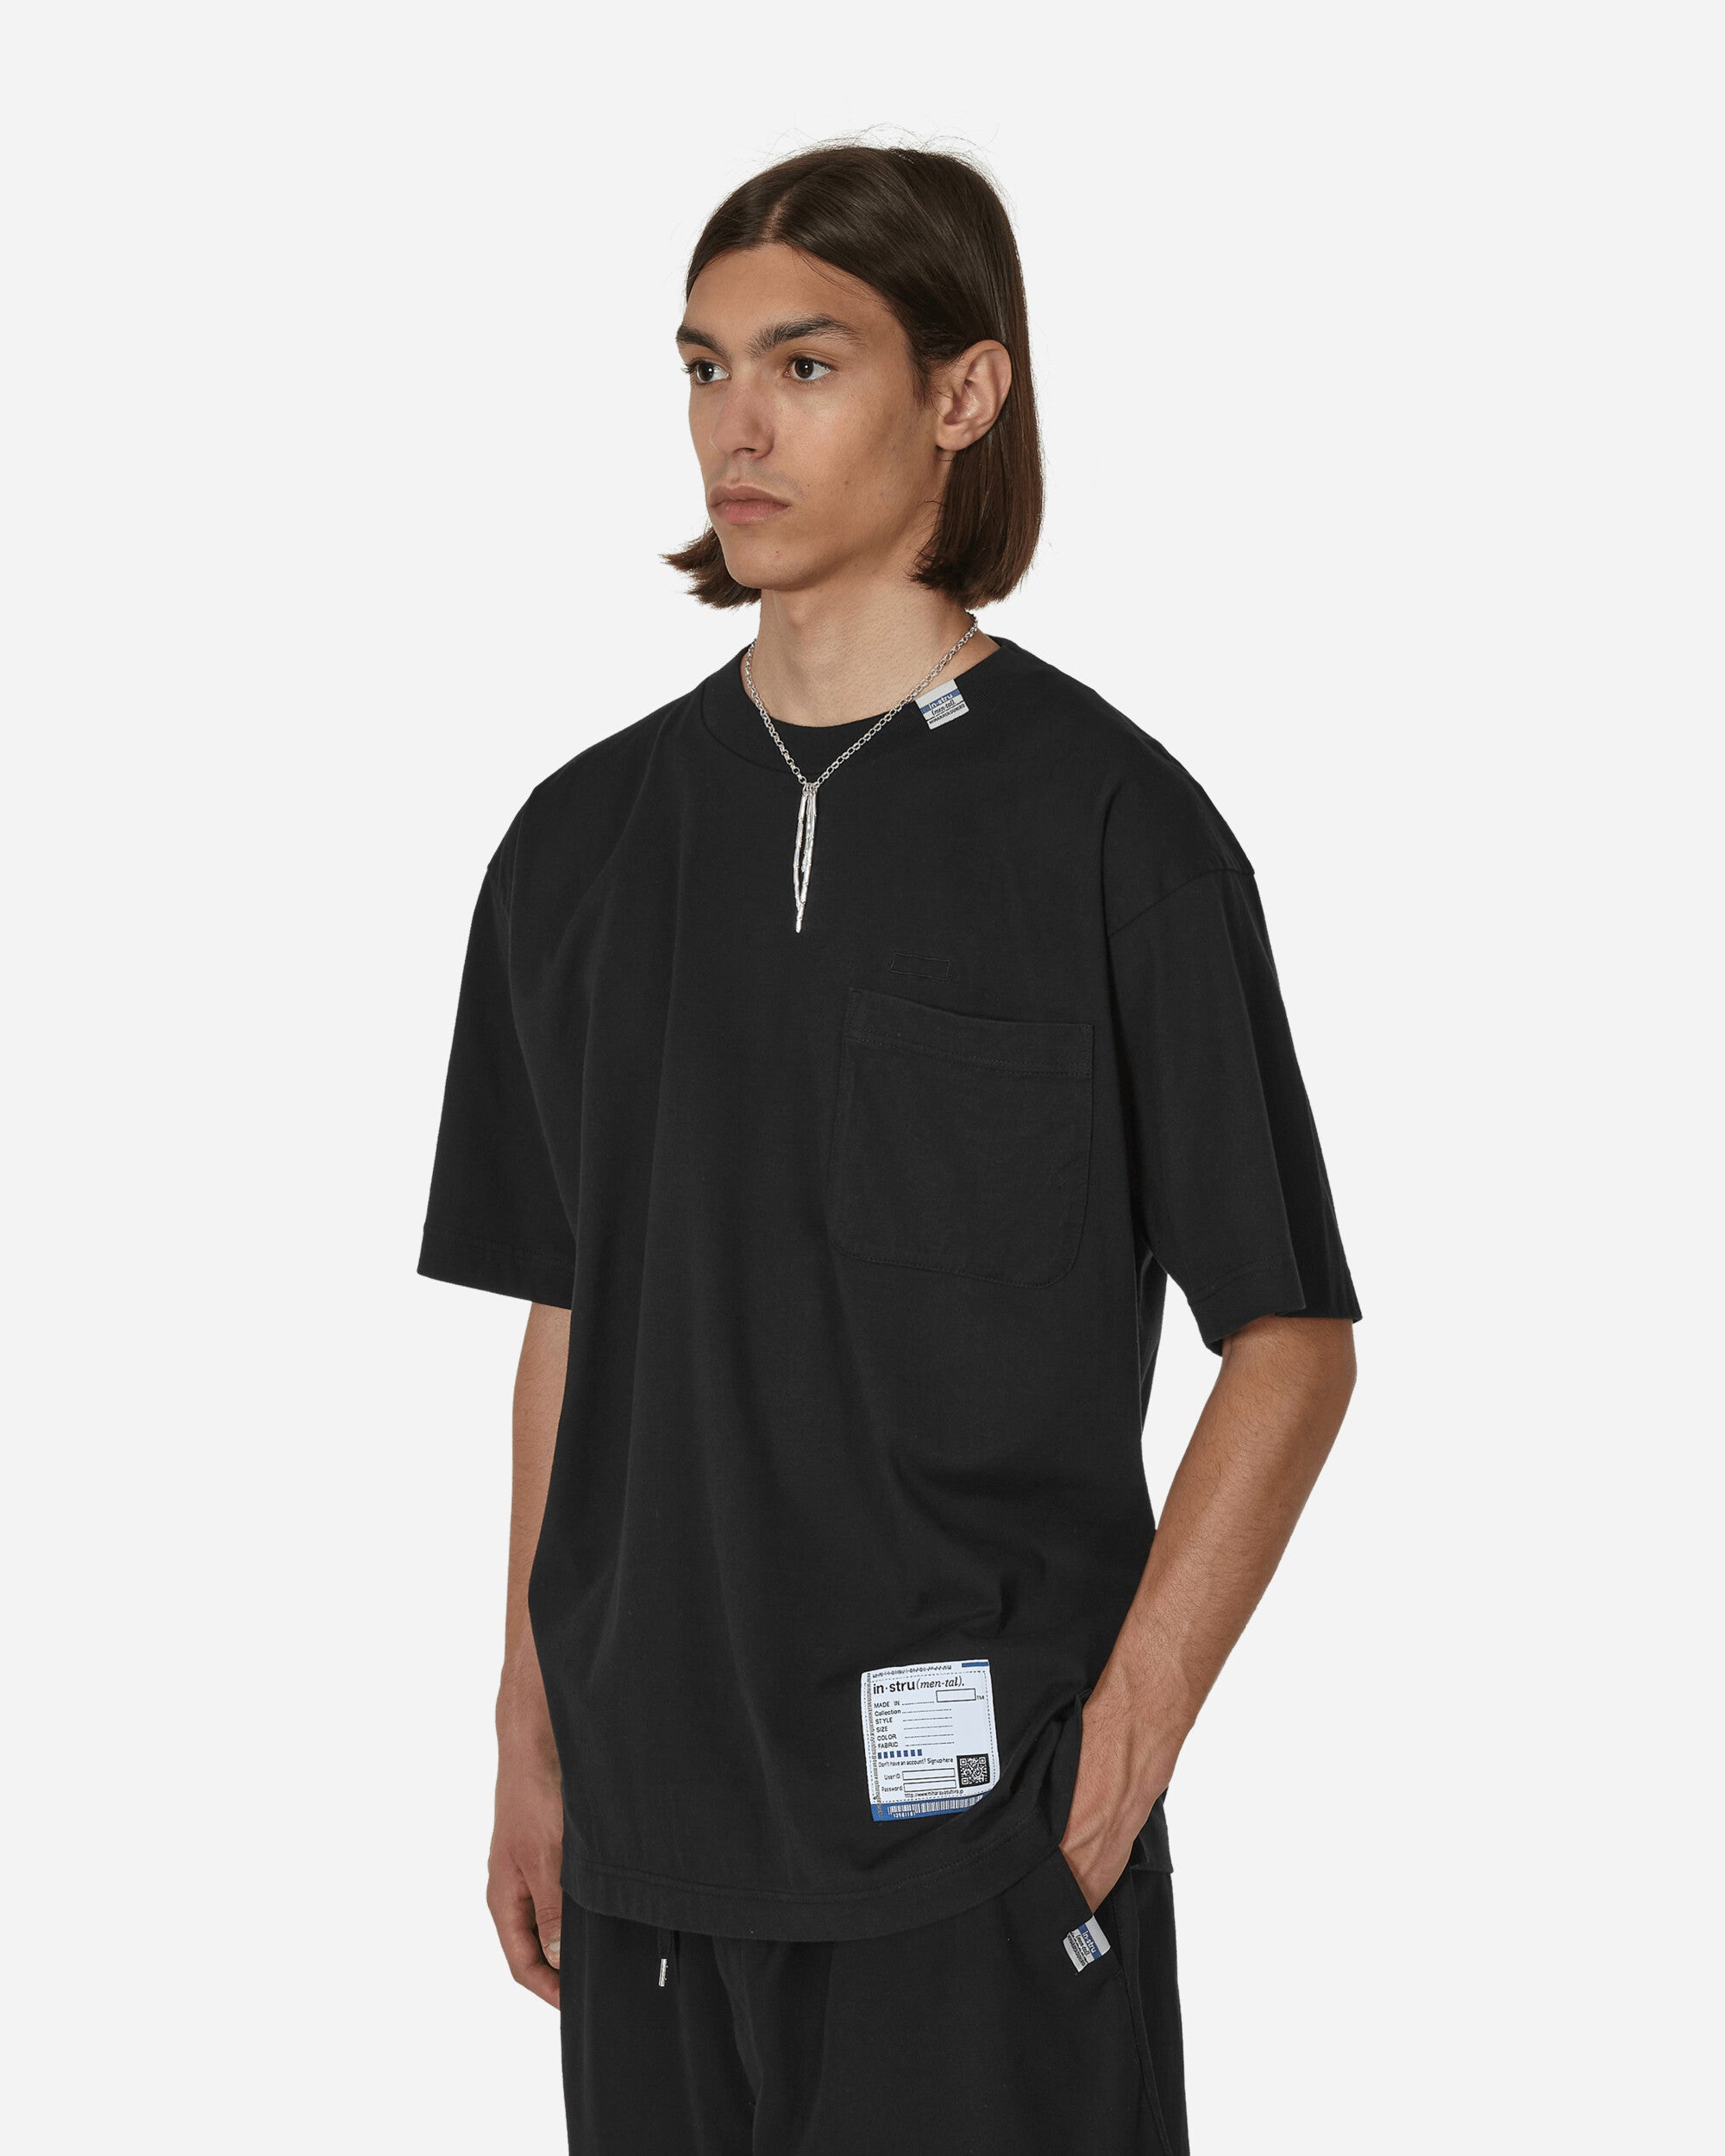 in・stru(men-tal) Embroidery T-Shirt Black T-Shirts Shortsleeve I08TS531 2